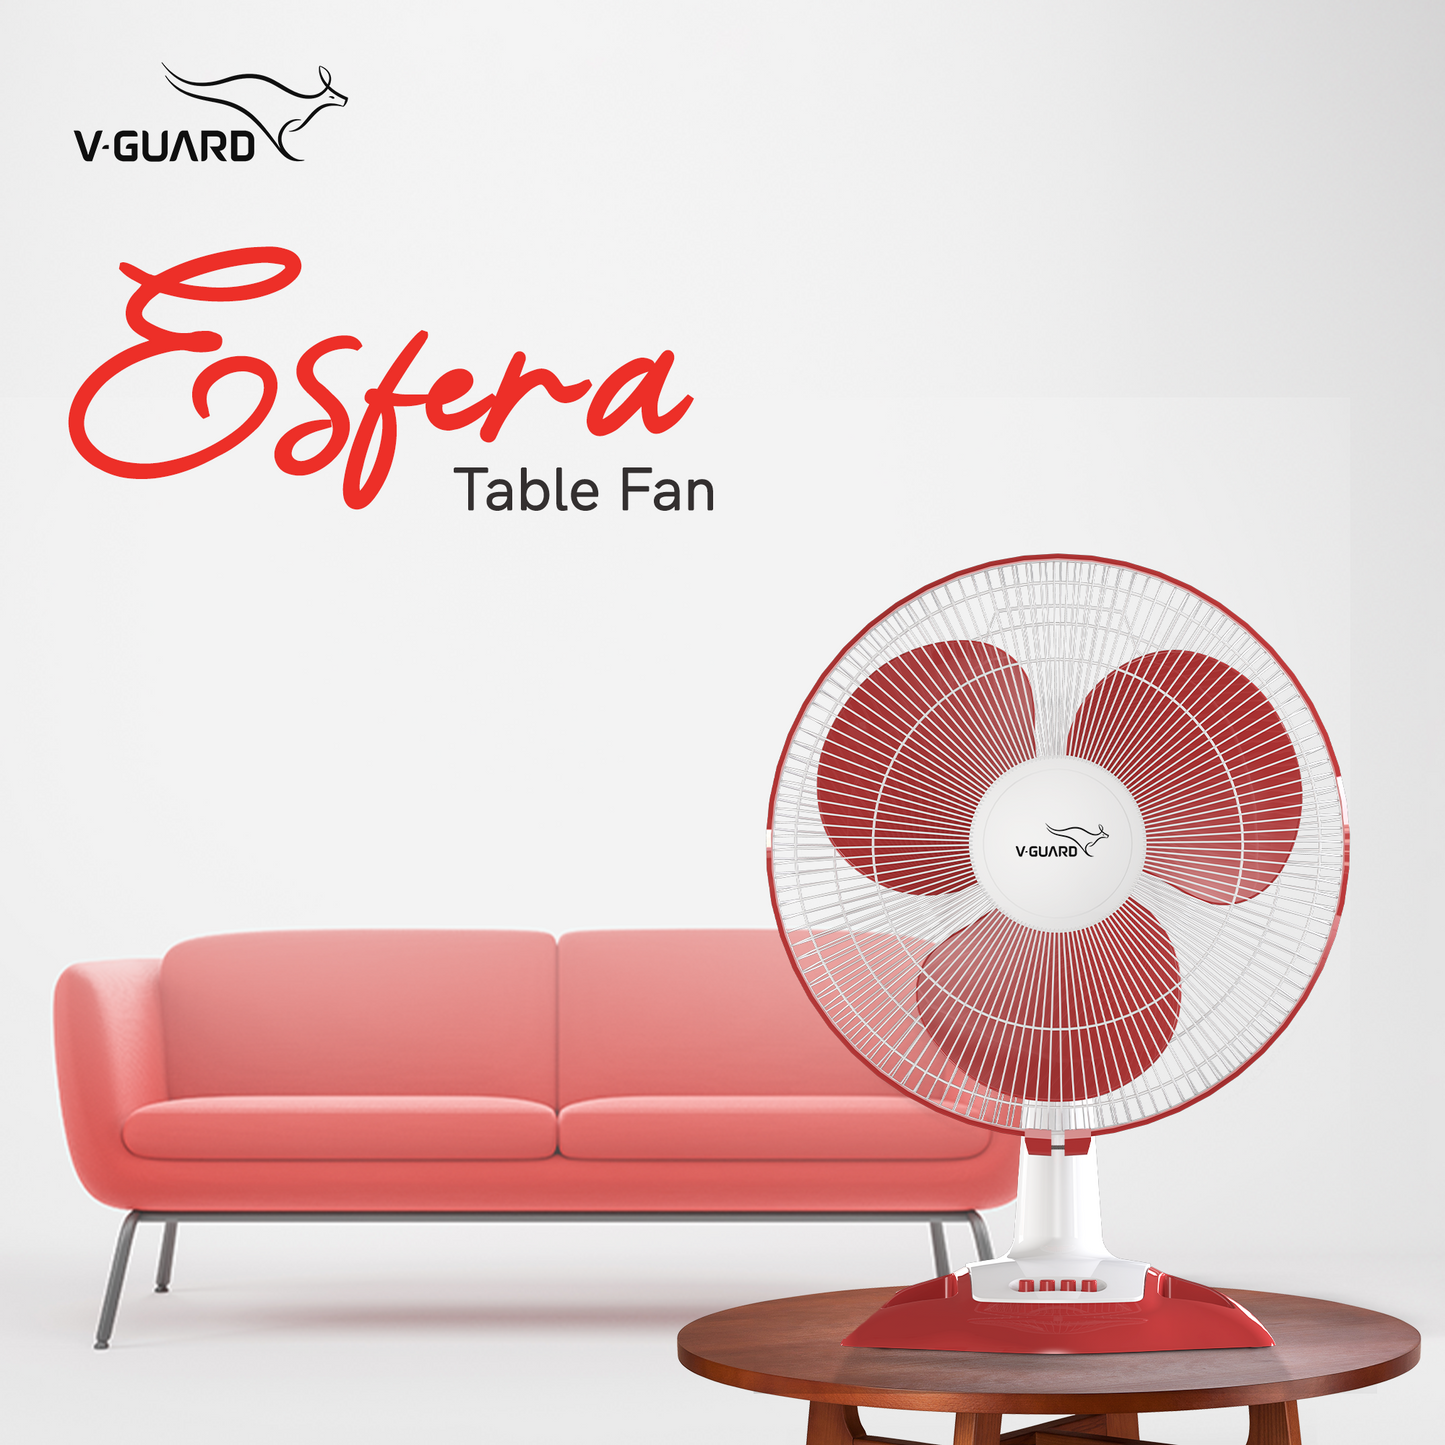 Esfera TF Table Fan, 1350 RPM, White Red